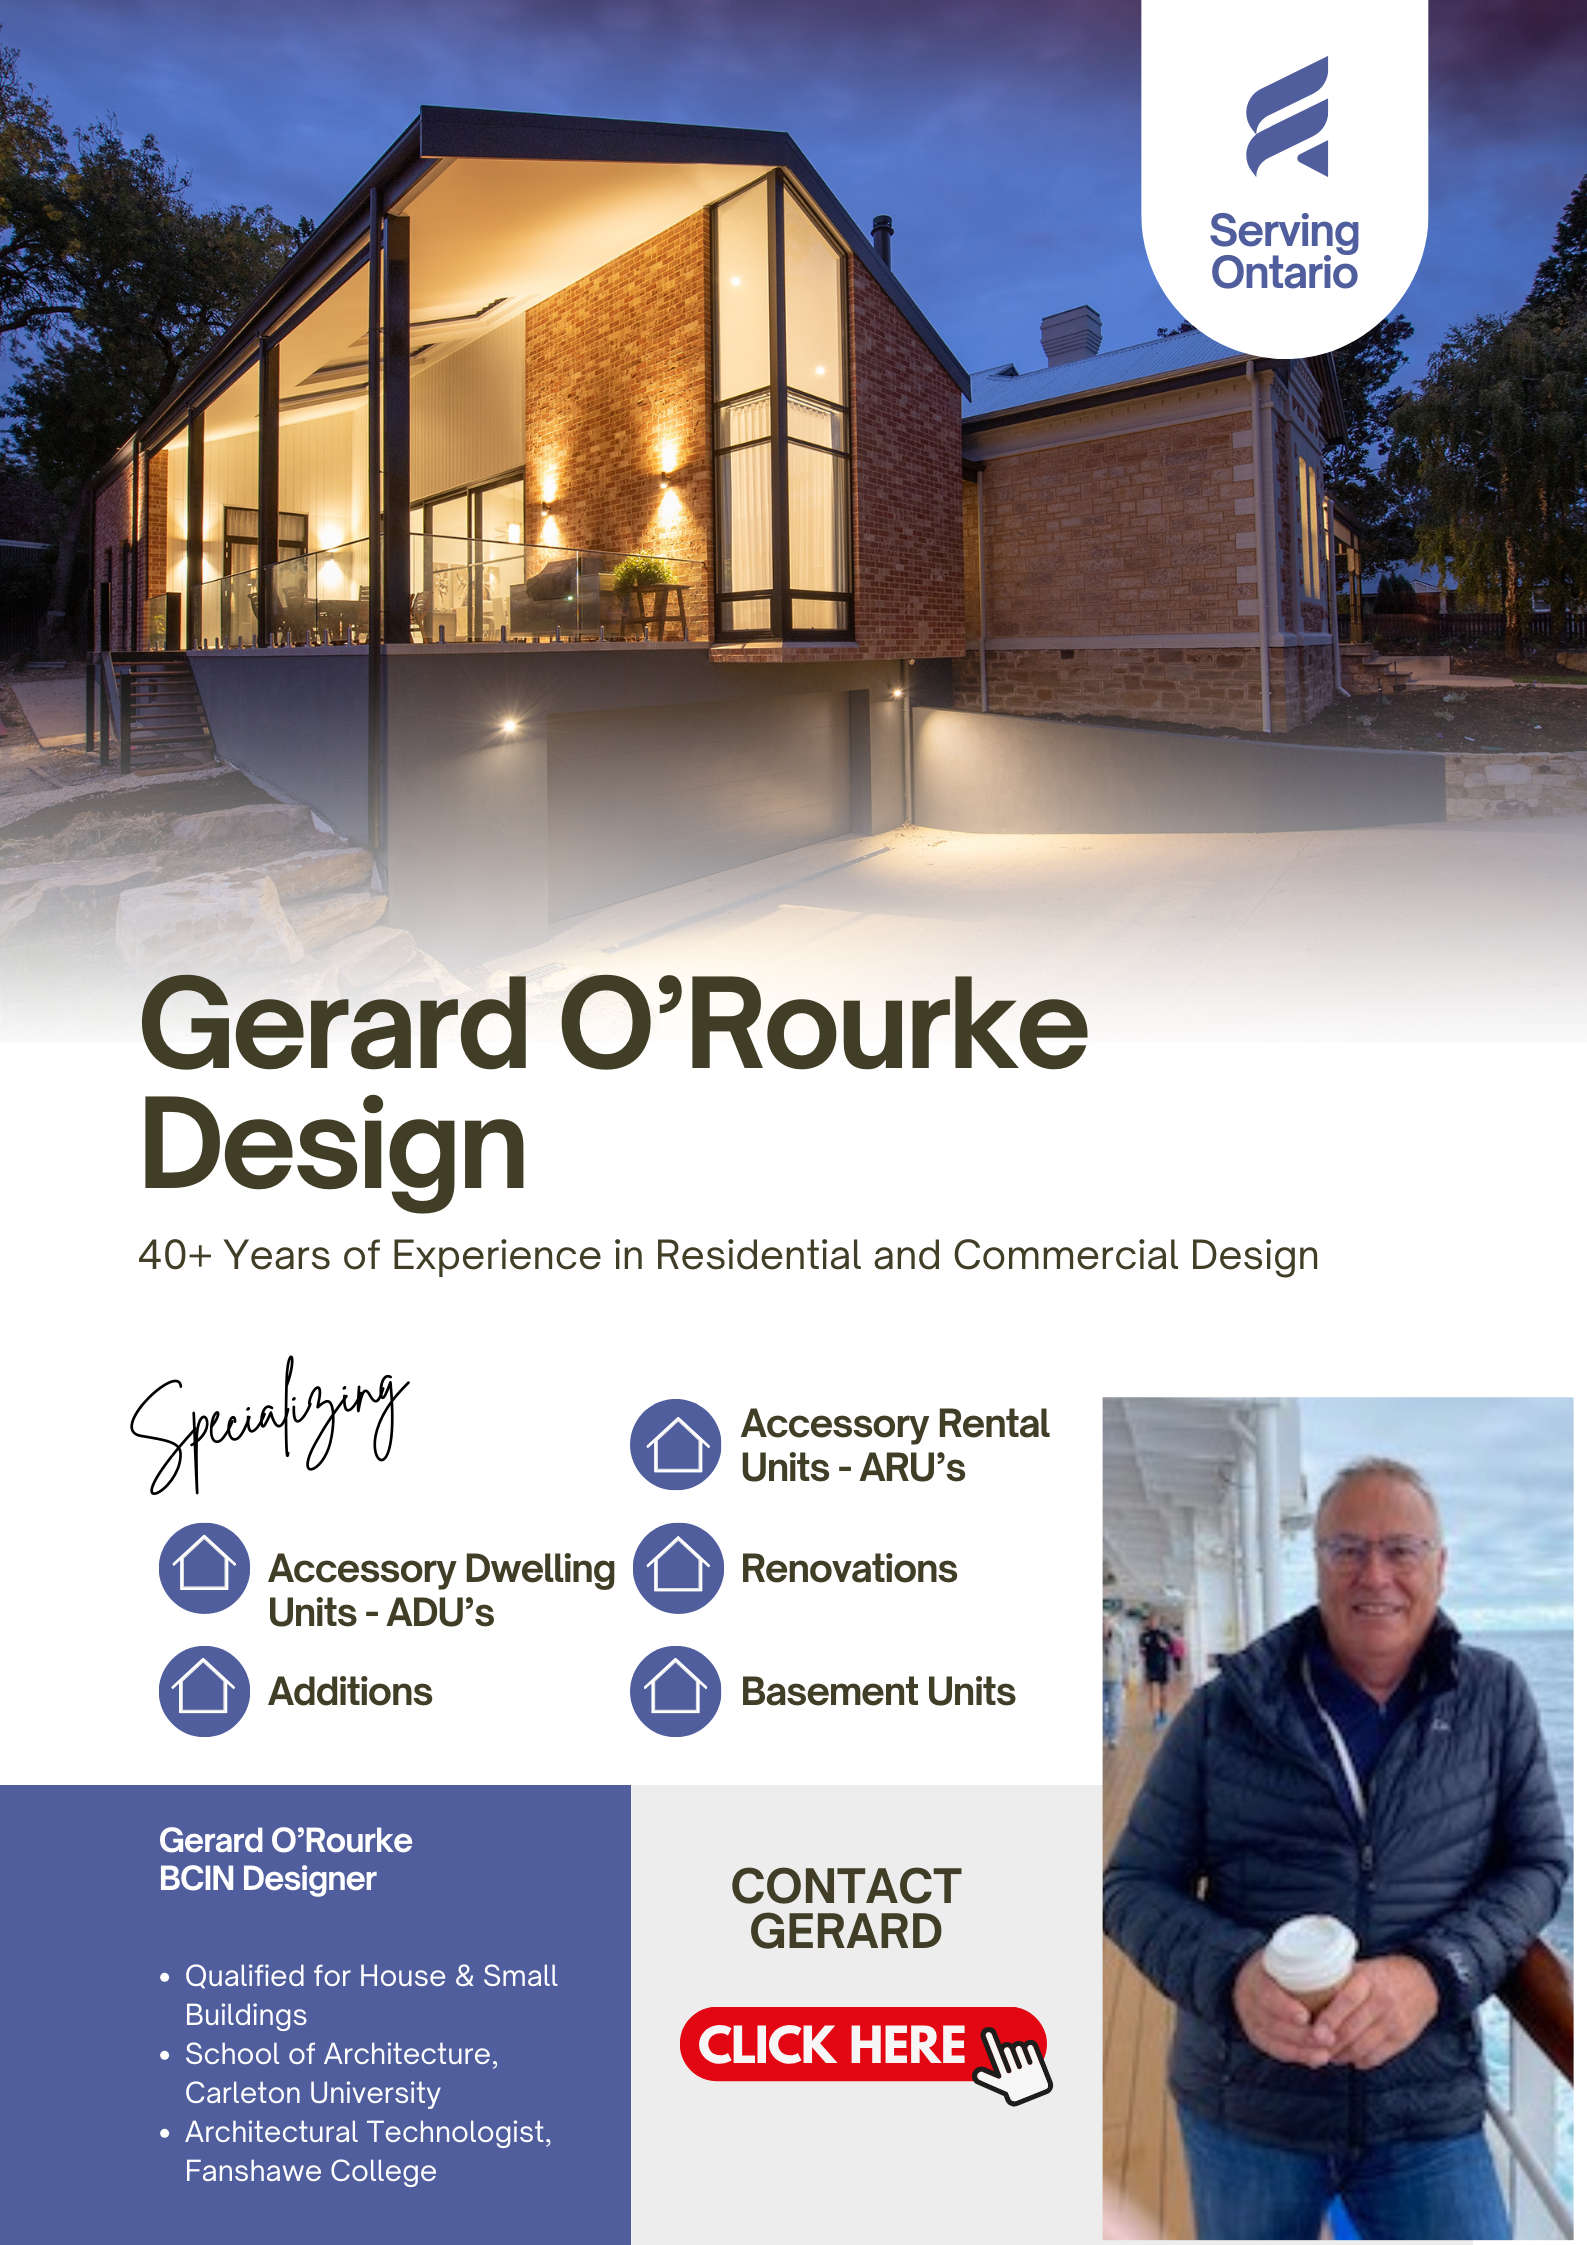 Gerard O'Rourke Design